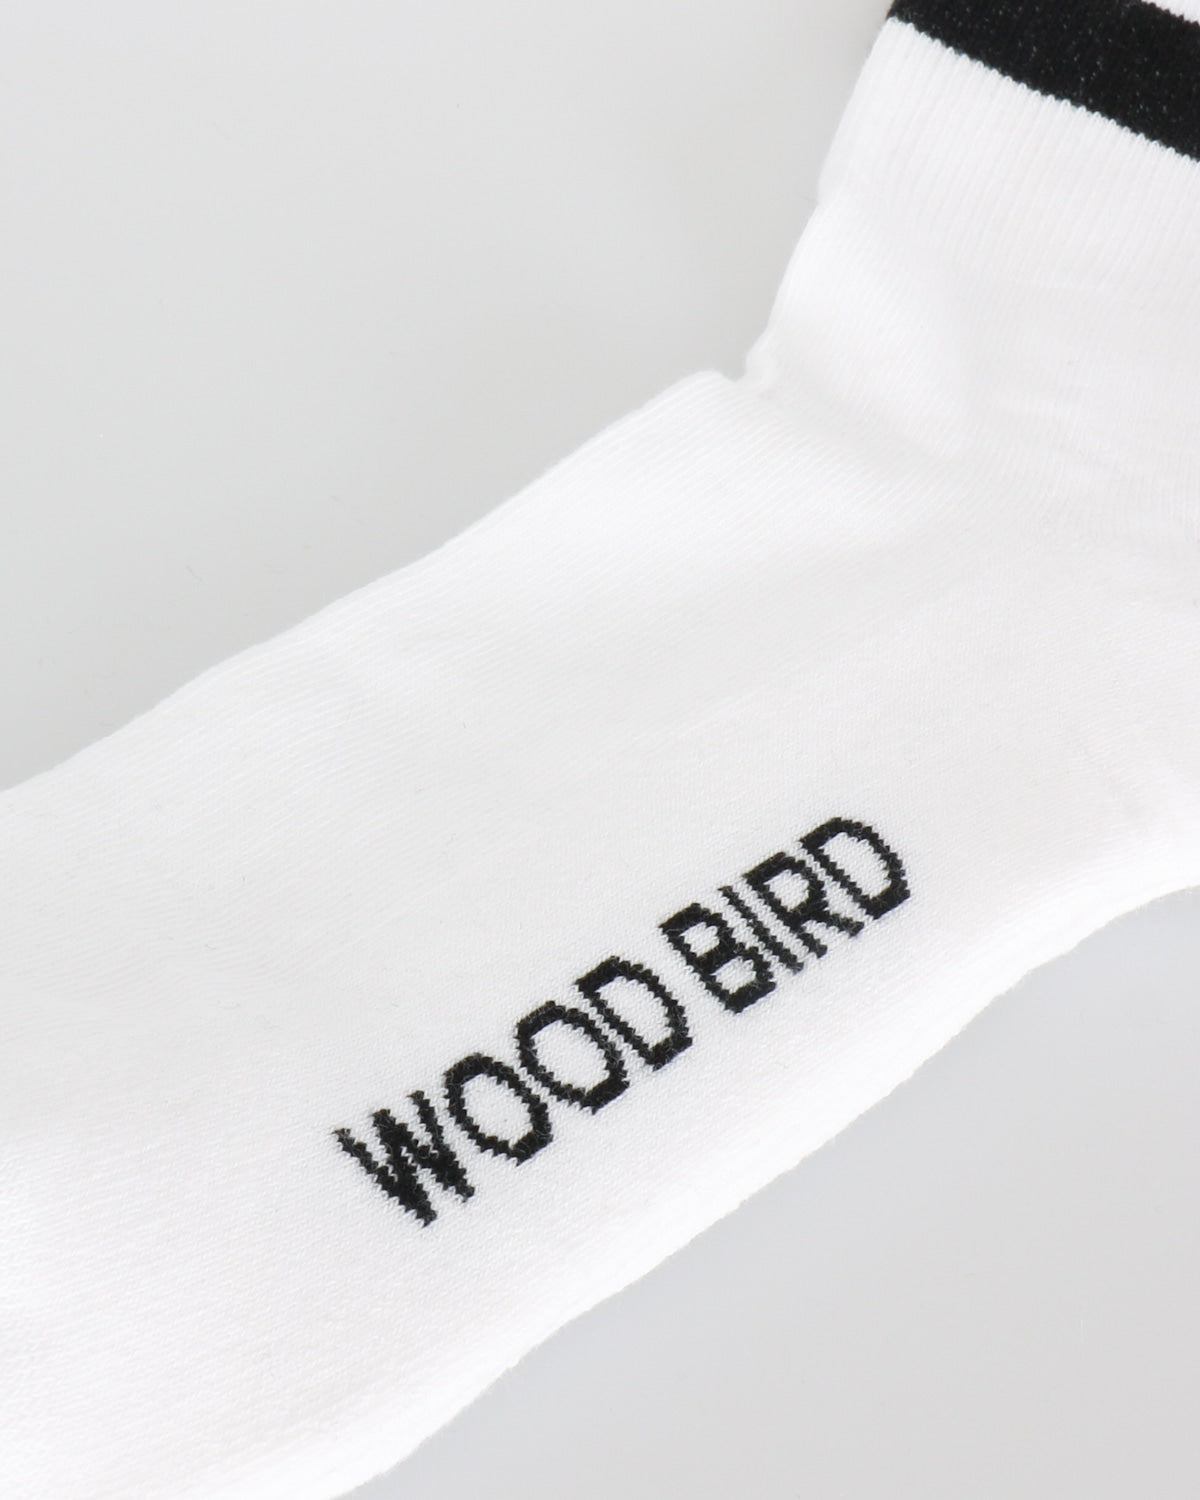 woodbird_tennis socks_white black_2_2